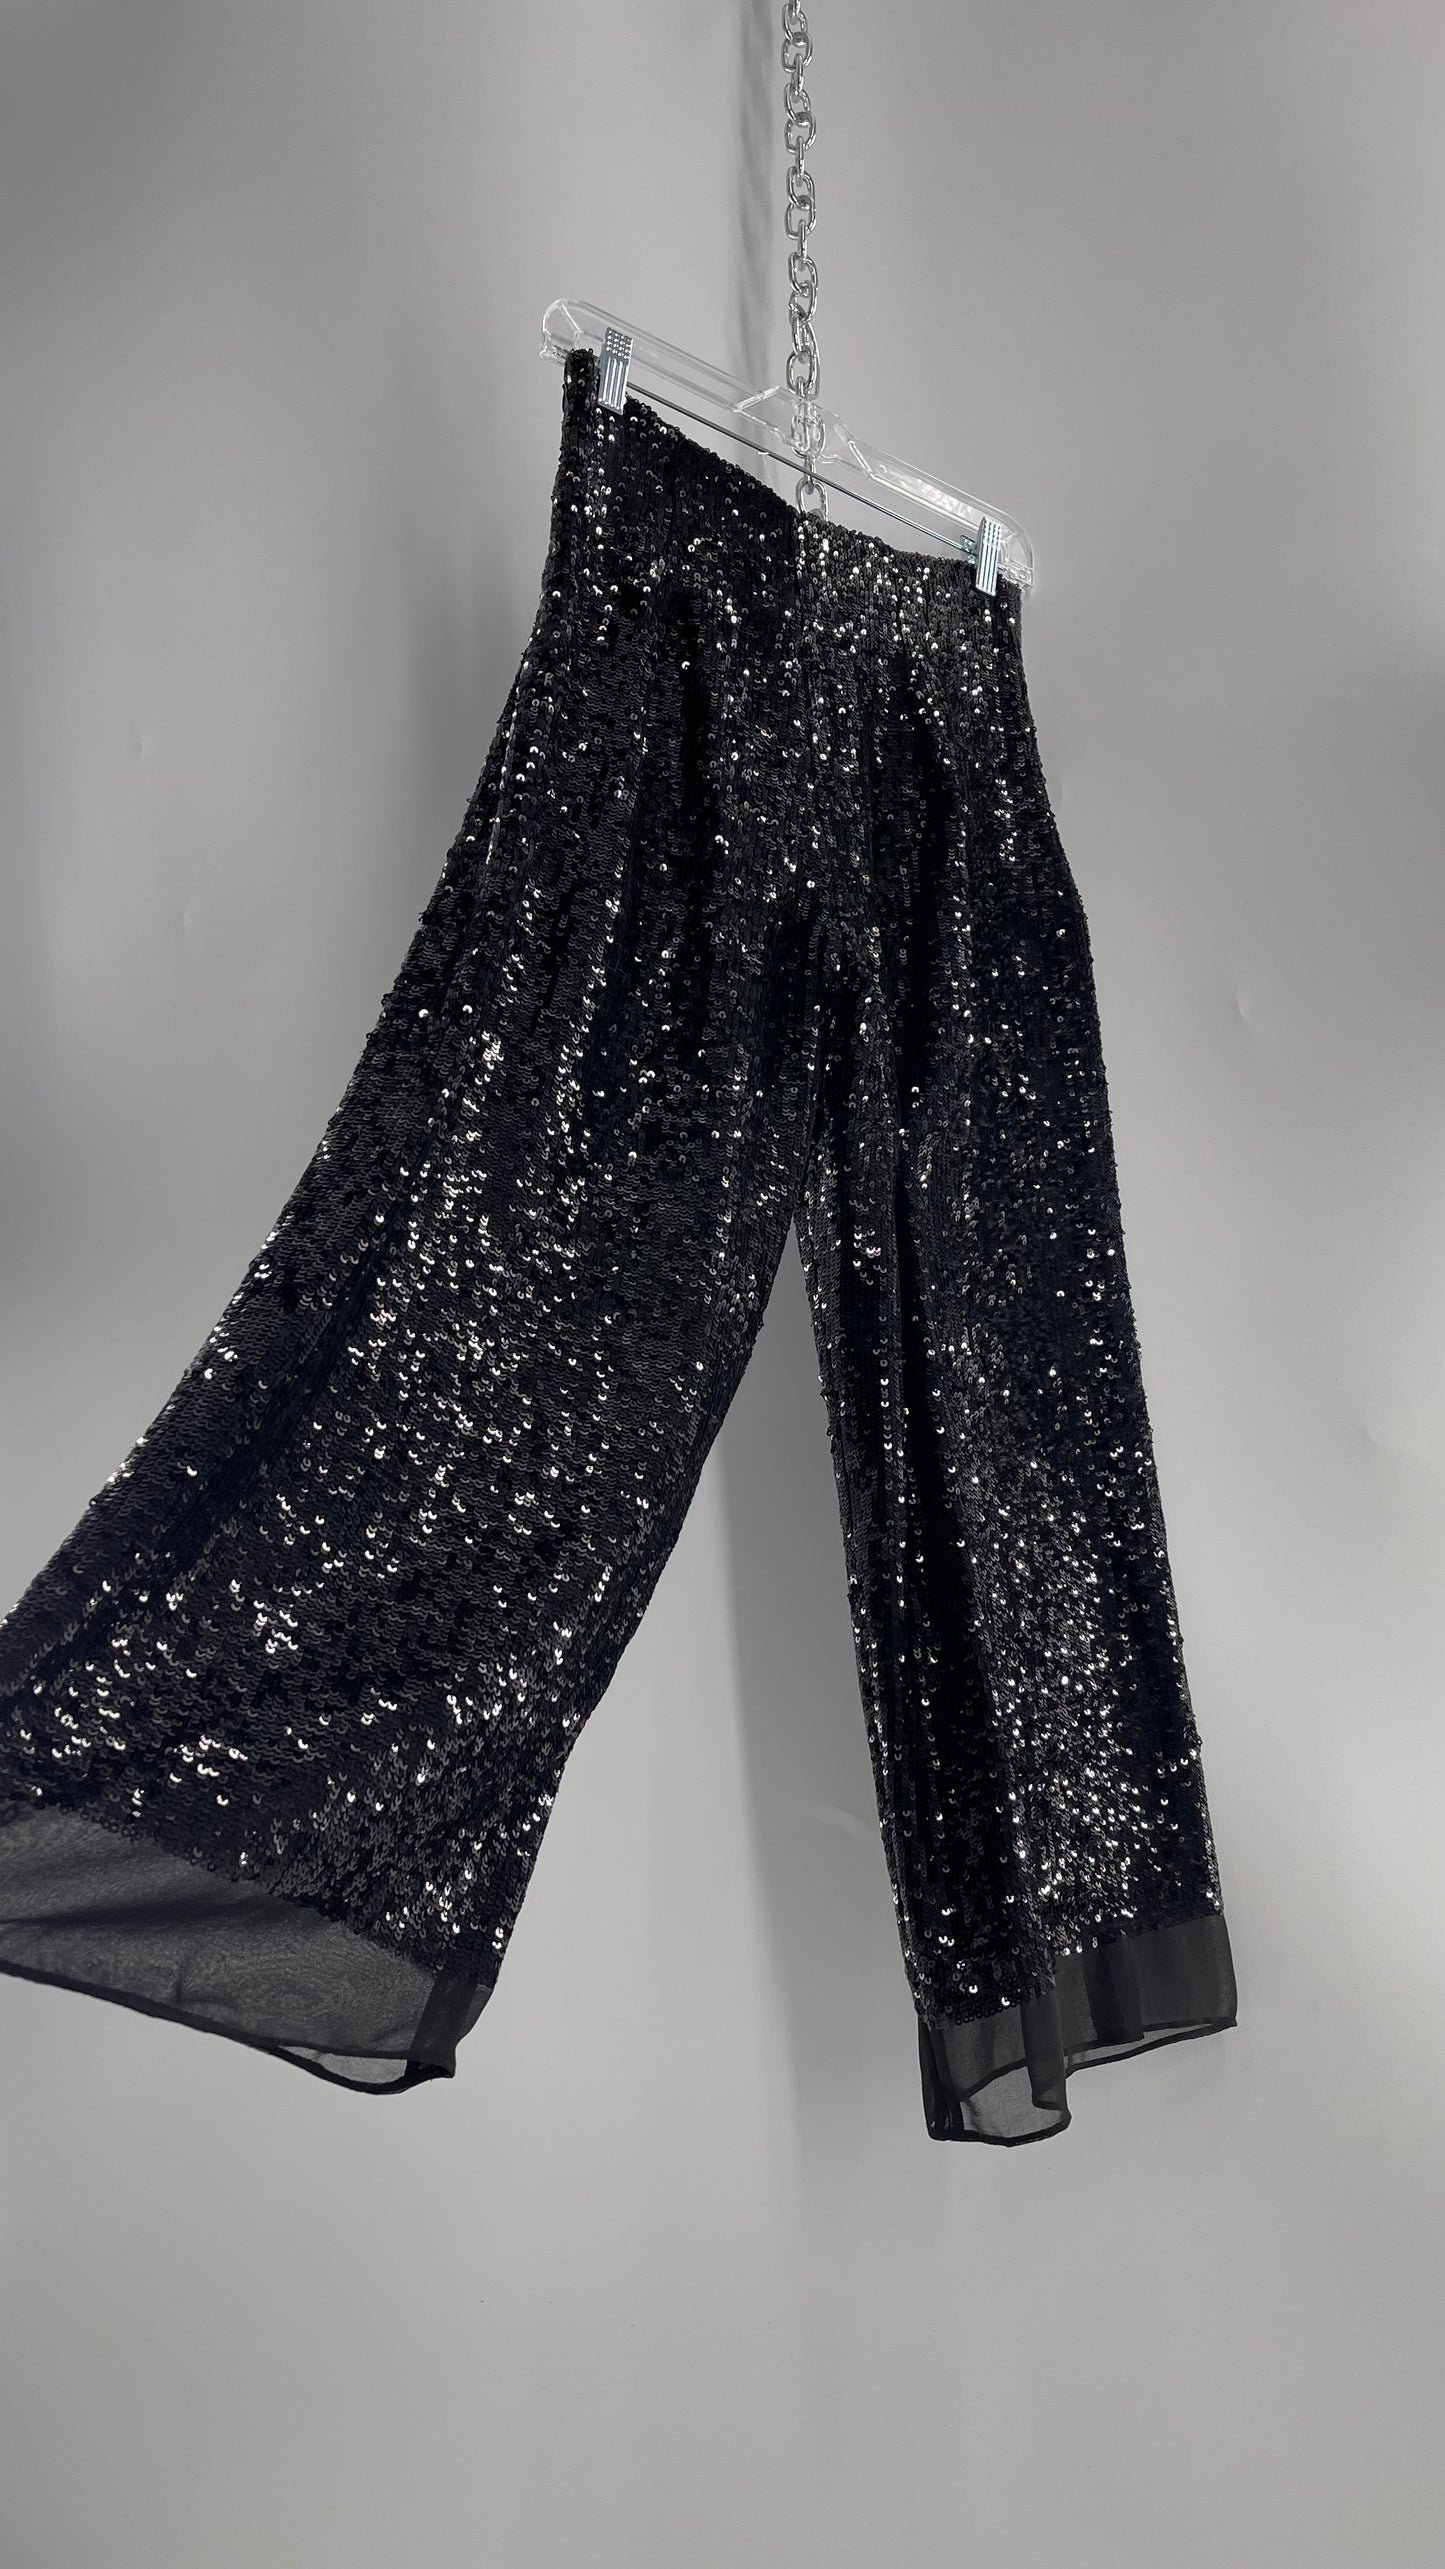 ZARA STUDIO Black Sequin Pijama Trouser with Chiffon Hem and Ribbon Lined Waist (Medium)